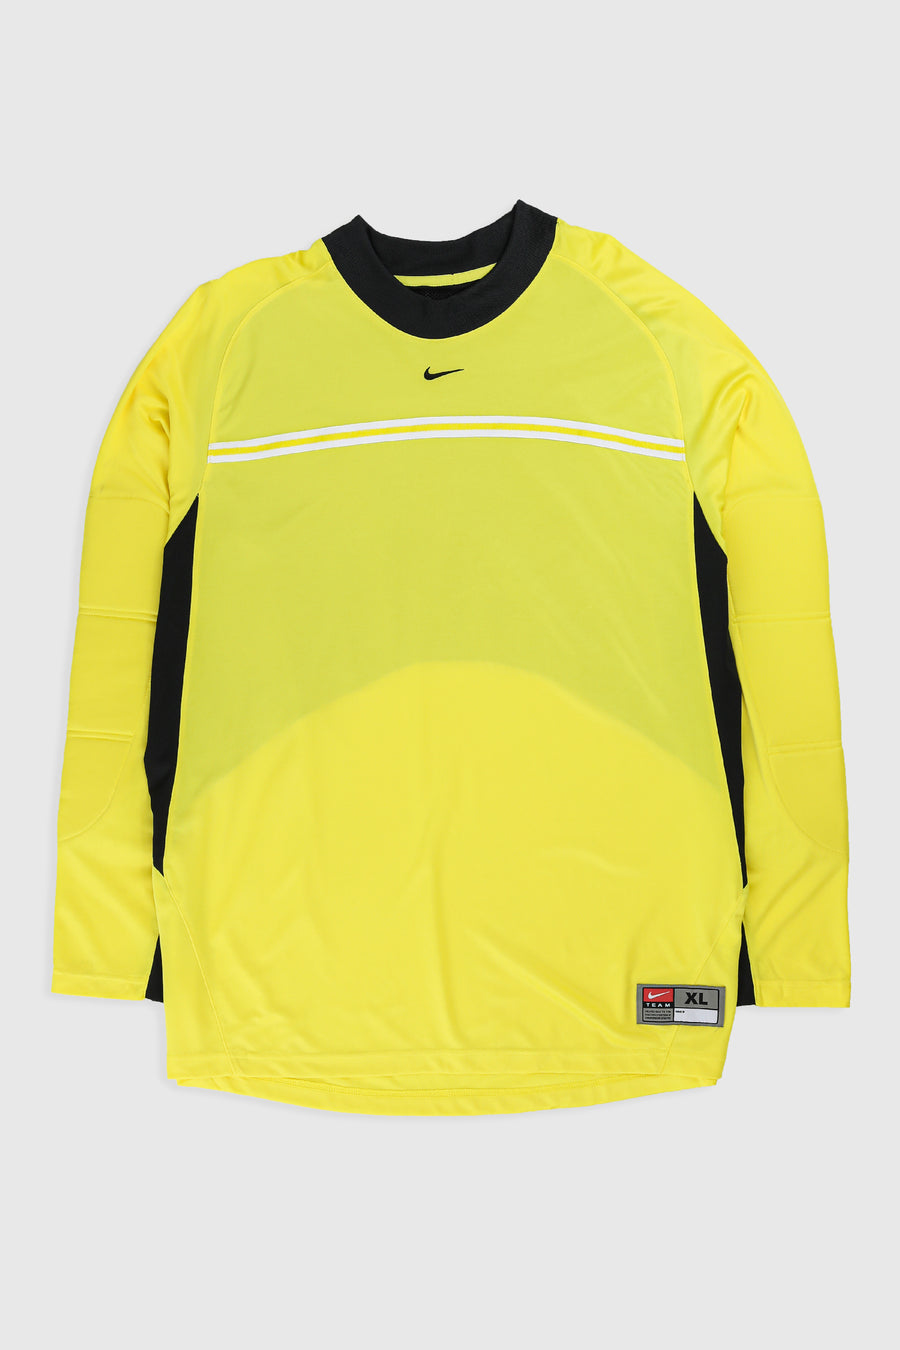 Vintage Nike Long Sleeve Jersey